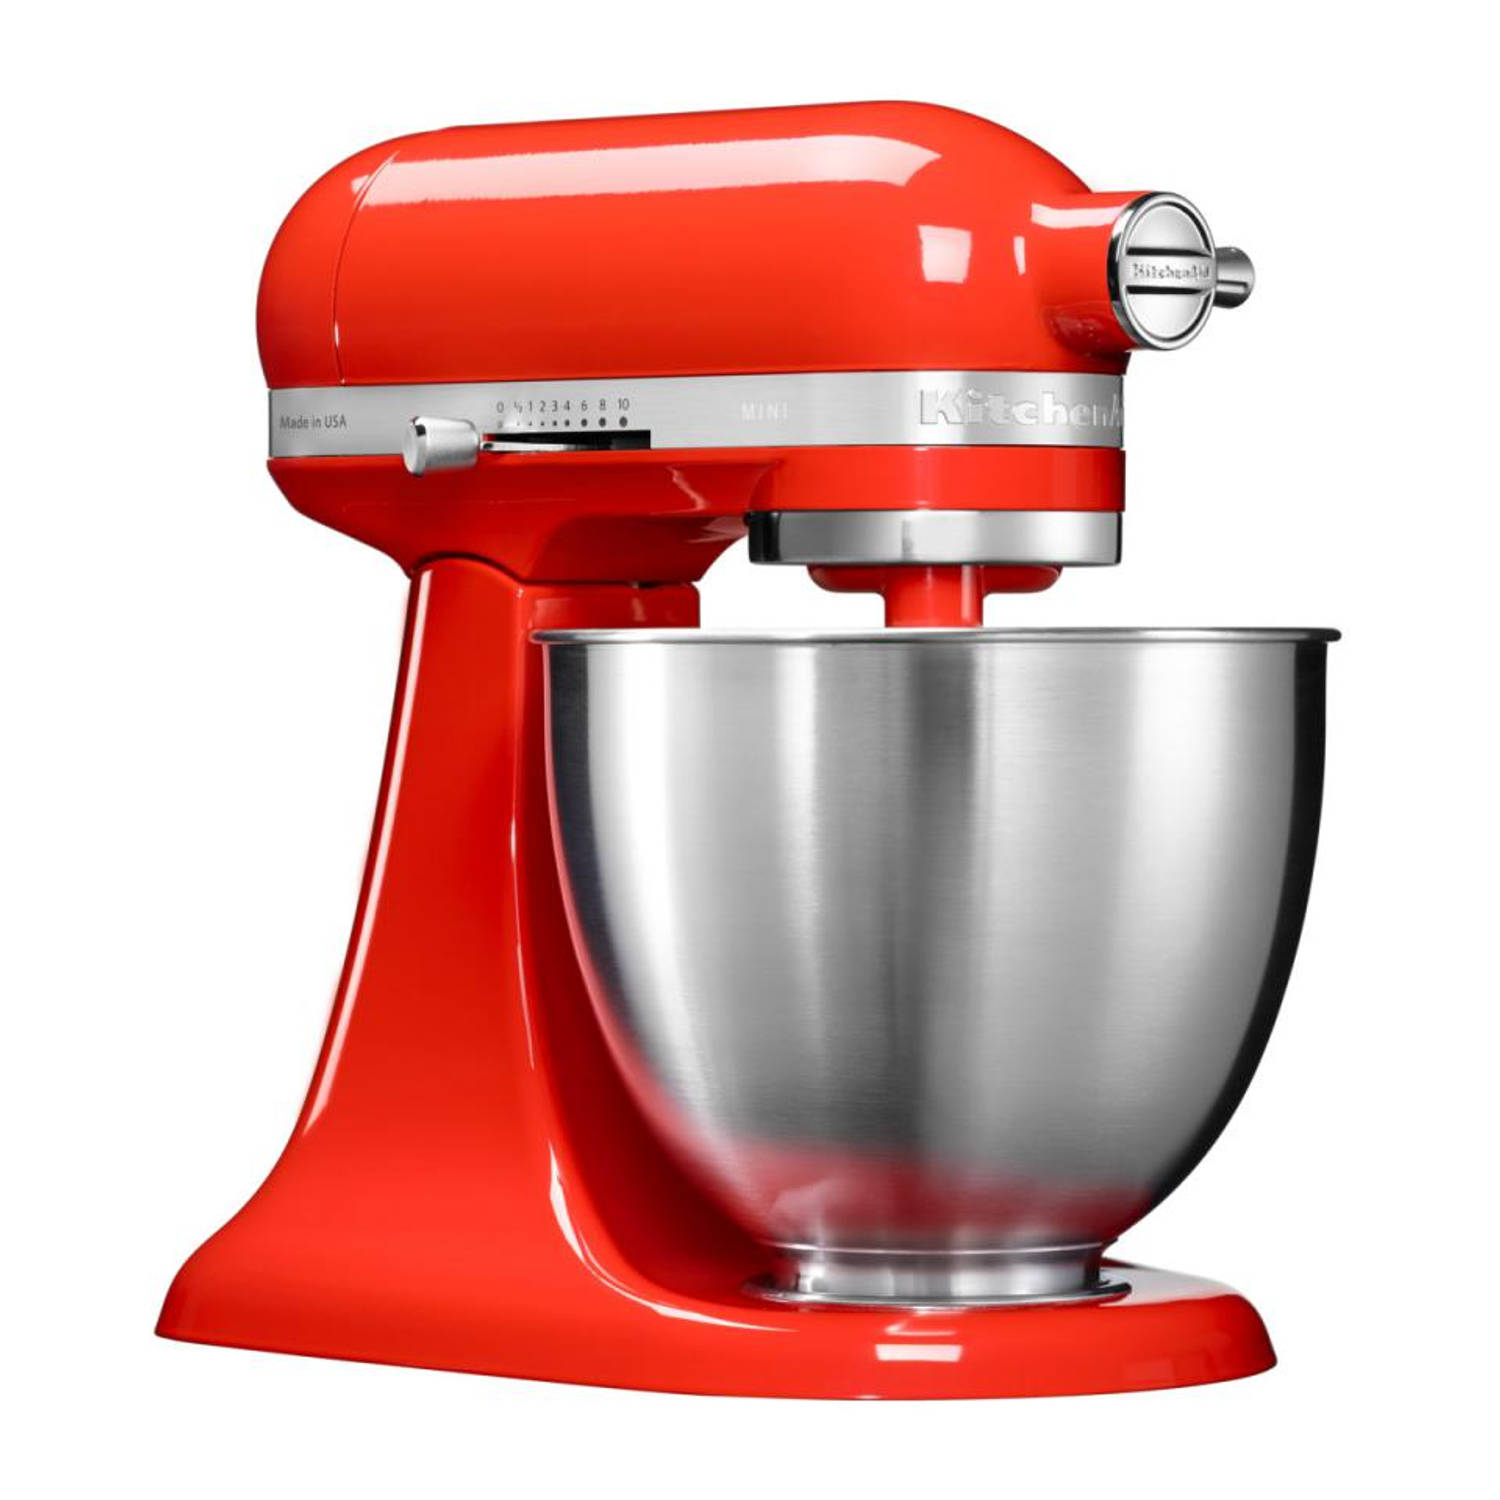 KitchenAid Artisan keukenmixer 5KSM3311 - rood | Blokker